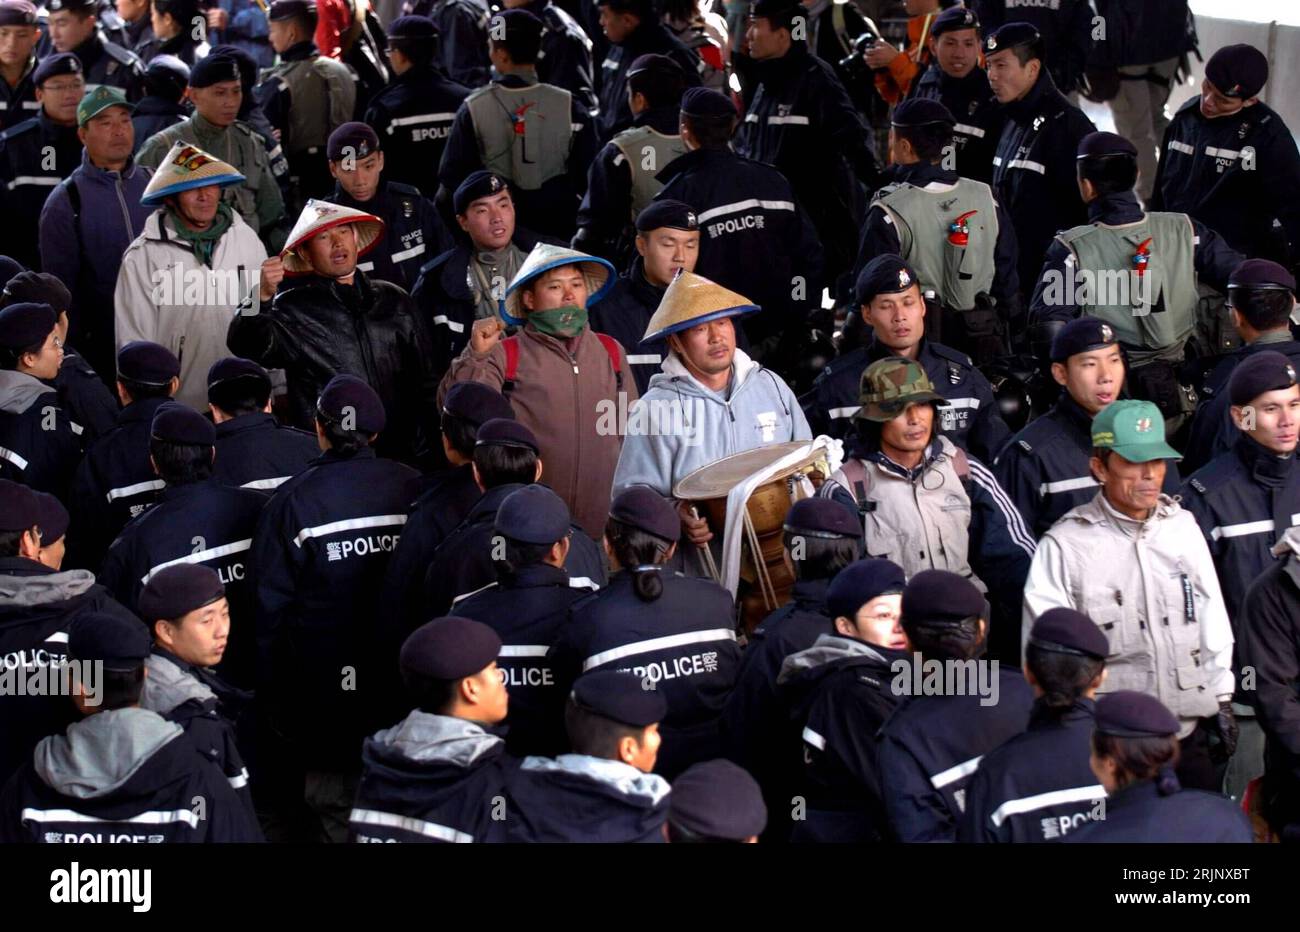 Bildnummer: 51030874  Datum: 18.12.2005  Copyright: imago/Xinhua Polizisten führen Globalisierungsgegner ab auf einer Demonstration gegen den WTO-Gipfel in Hong Kong - PUBLICATIONxNOTxINxCHN, Personen; 2005, Hong Kong, Hongkong, Gipfel, Gipfeltreffen, World Trade Organization, Demo, Demonstrant, Demonstranten, Protest, Proteste, Globalisierungskritiker, Polizist, Einsatz, Einsätze, Polizeieinsatz, Polizeieinsätze, Festnahme, festnehmen, Verhaftung, Verhaftungen; , quer, Kbdig, Totale, China,  , Polizei, Staat, Gesellschaft Stock Photo